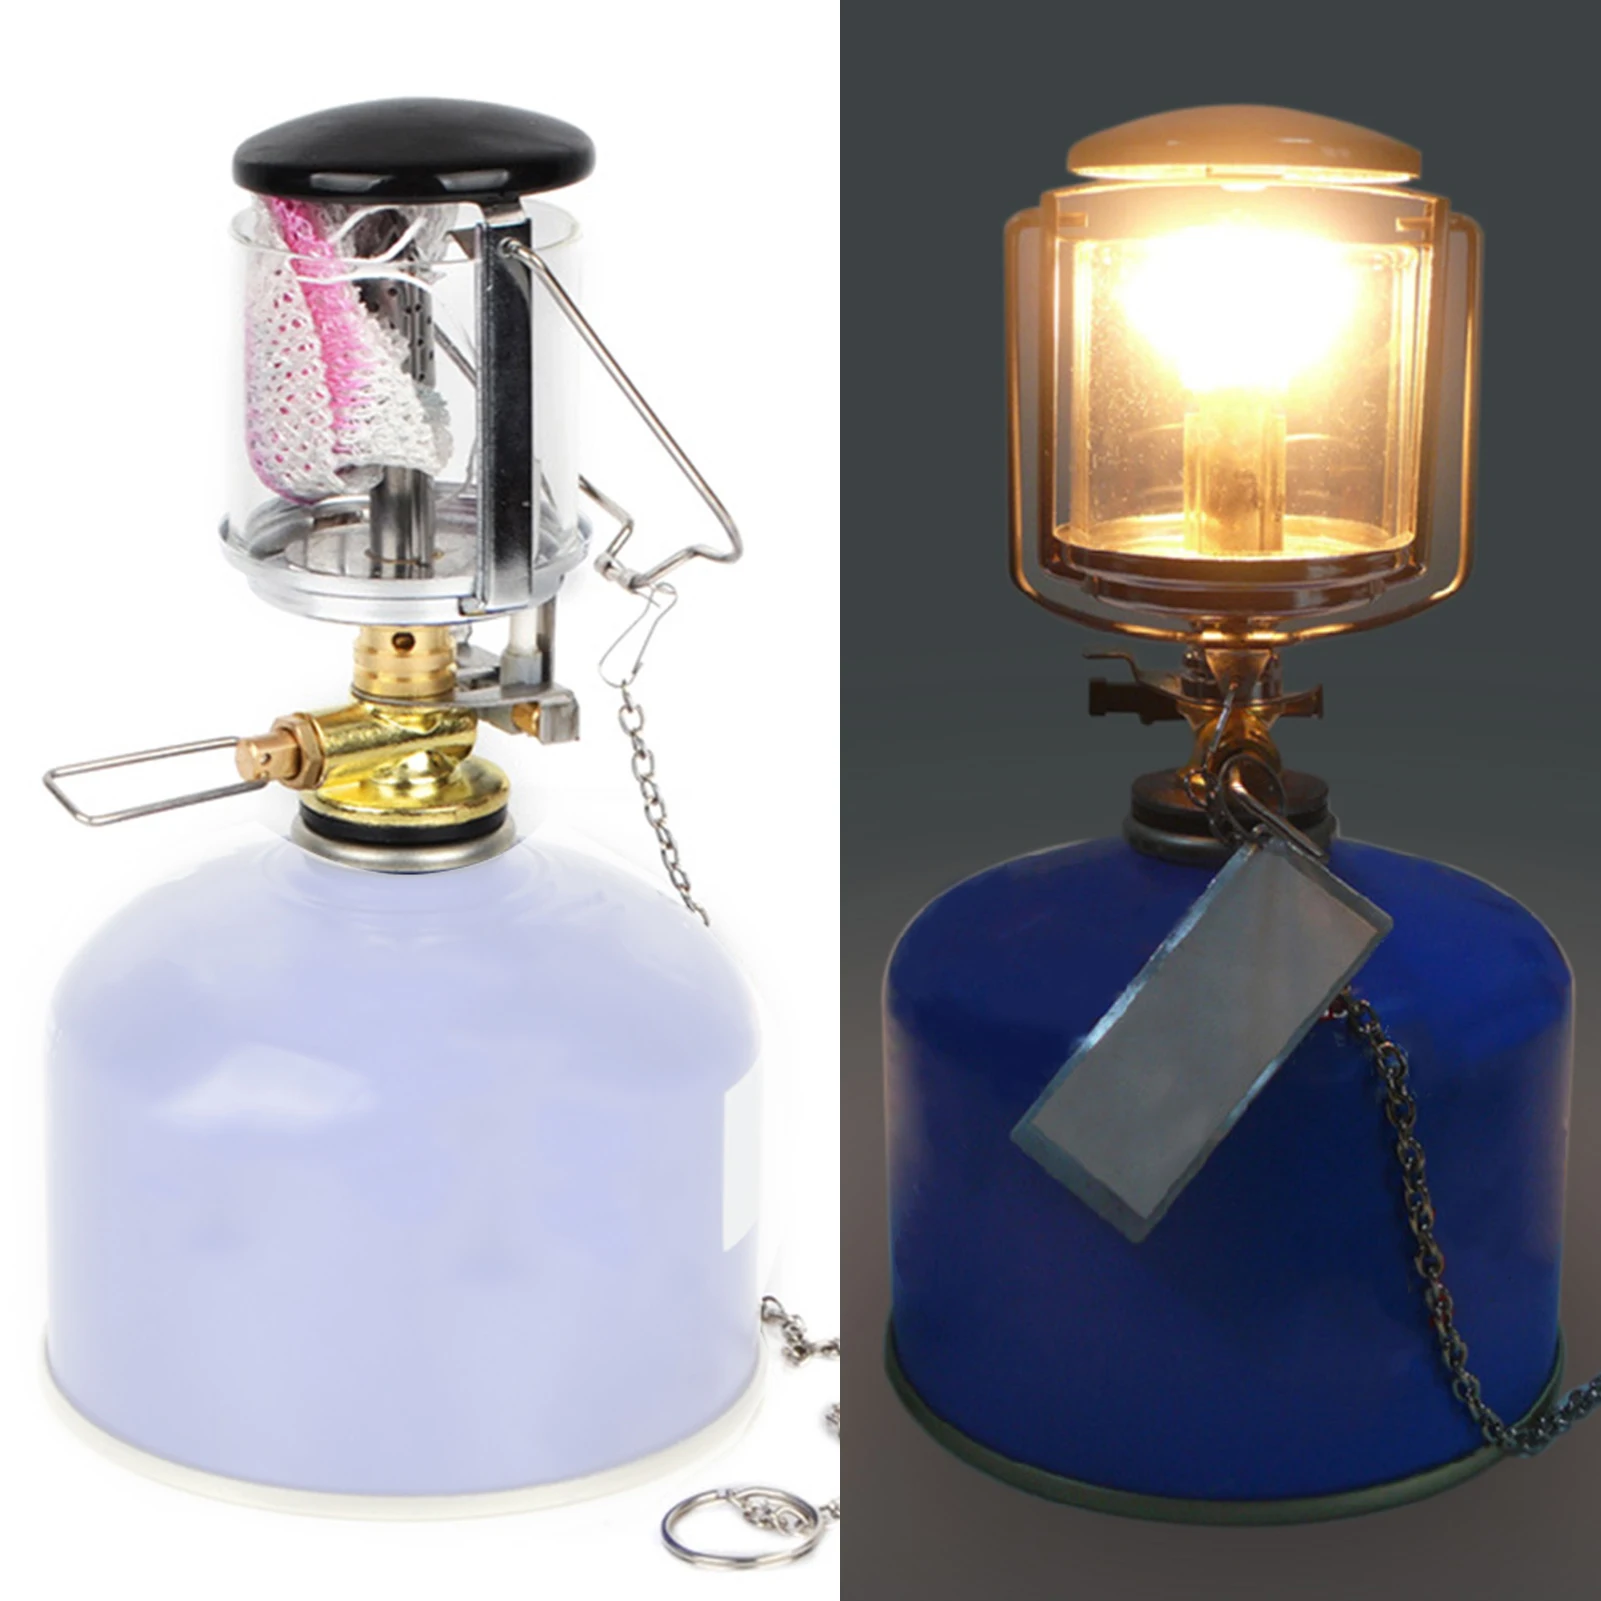 Aomiun Gas Lantern Outdoor Piezo Ignition Gas Tent Lamp Mini Camping Gas Light 